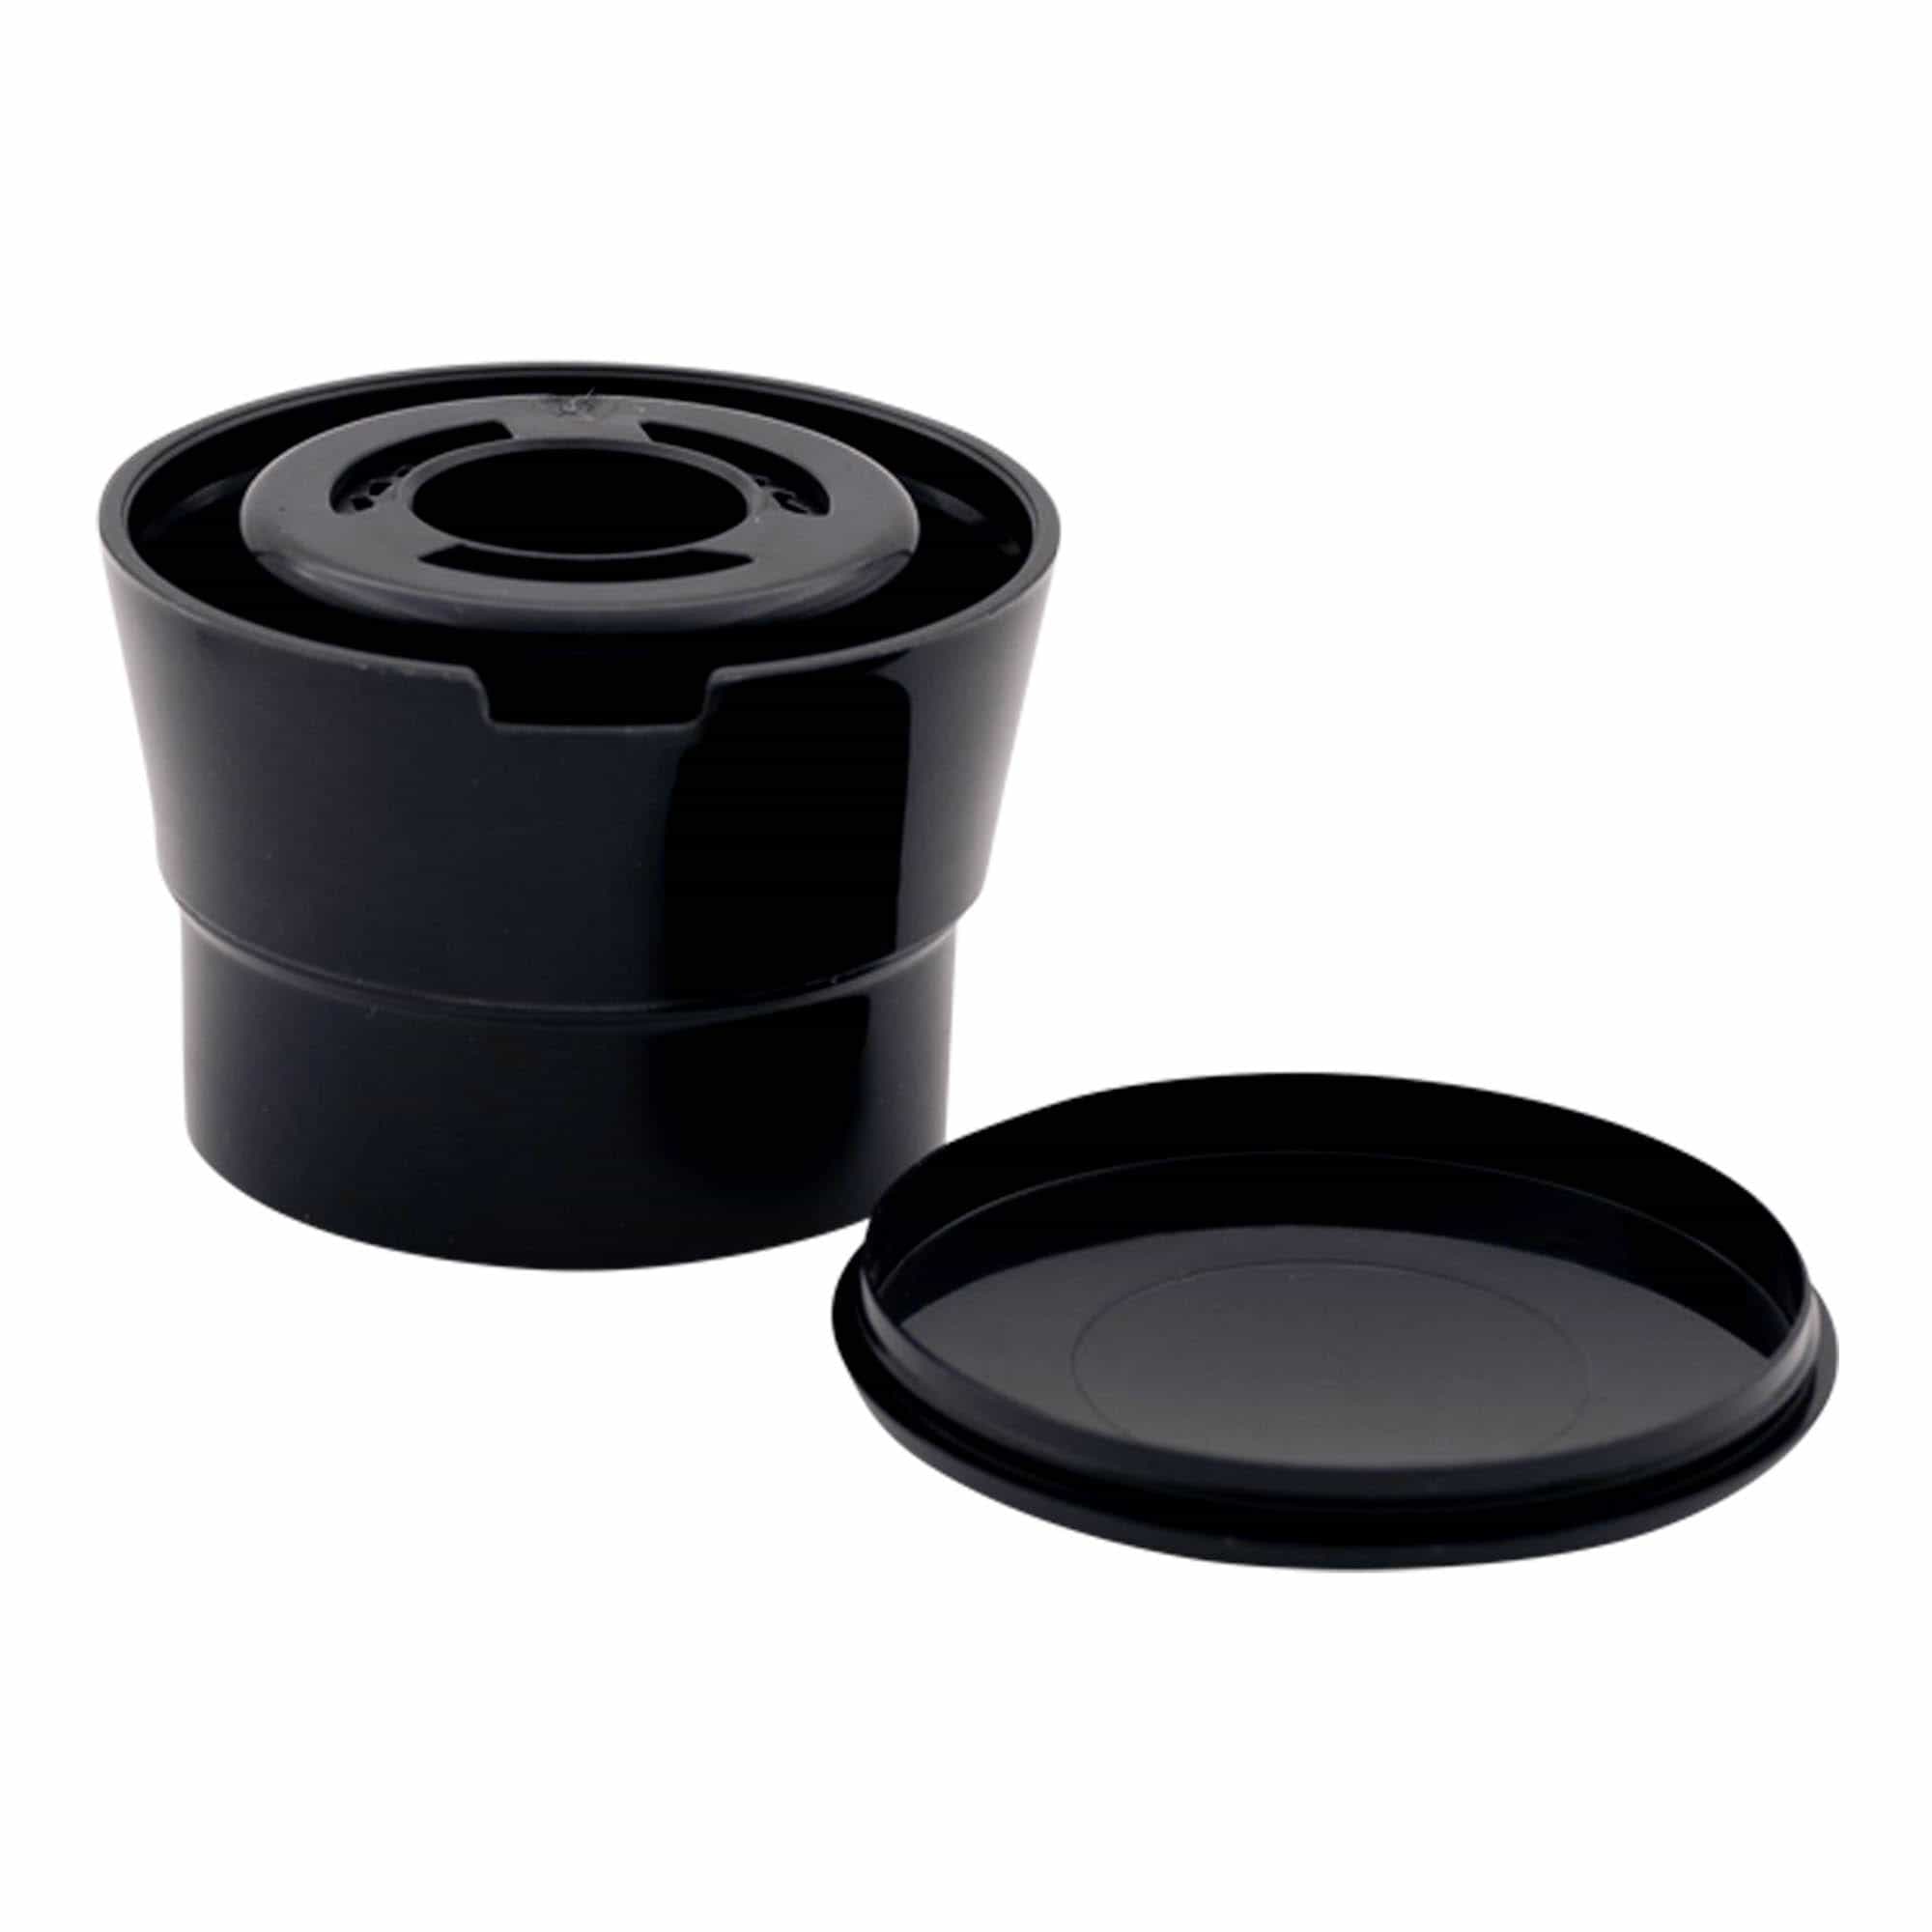 Mill cap for spice jar, PP plastic, black, for opening: GPI 38/400